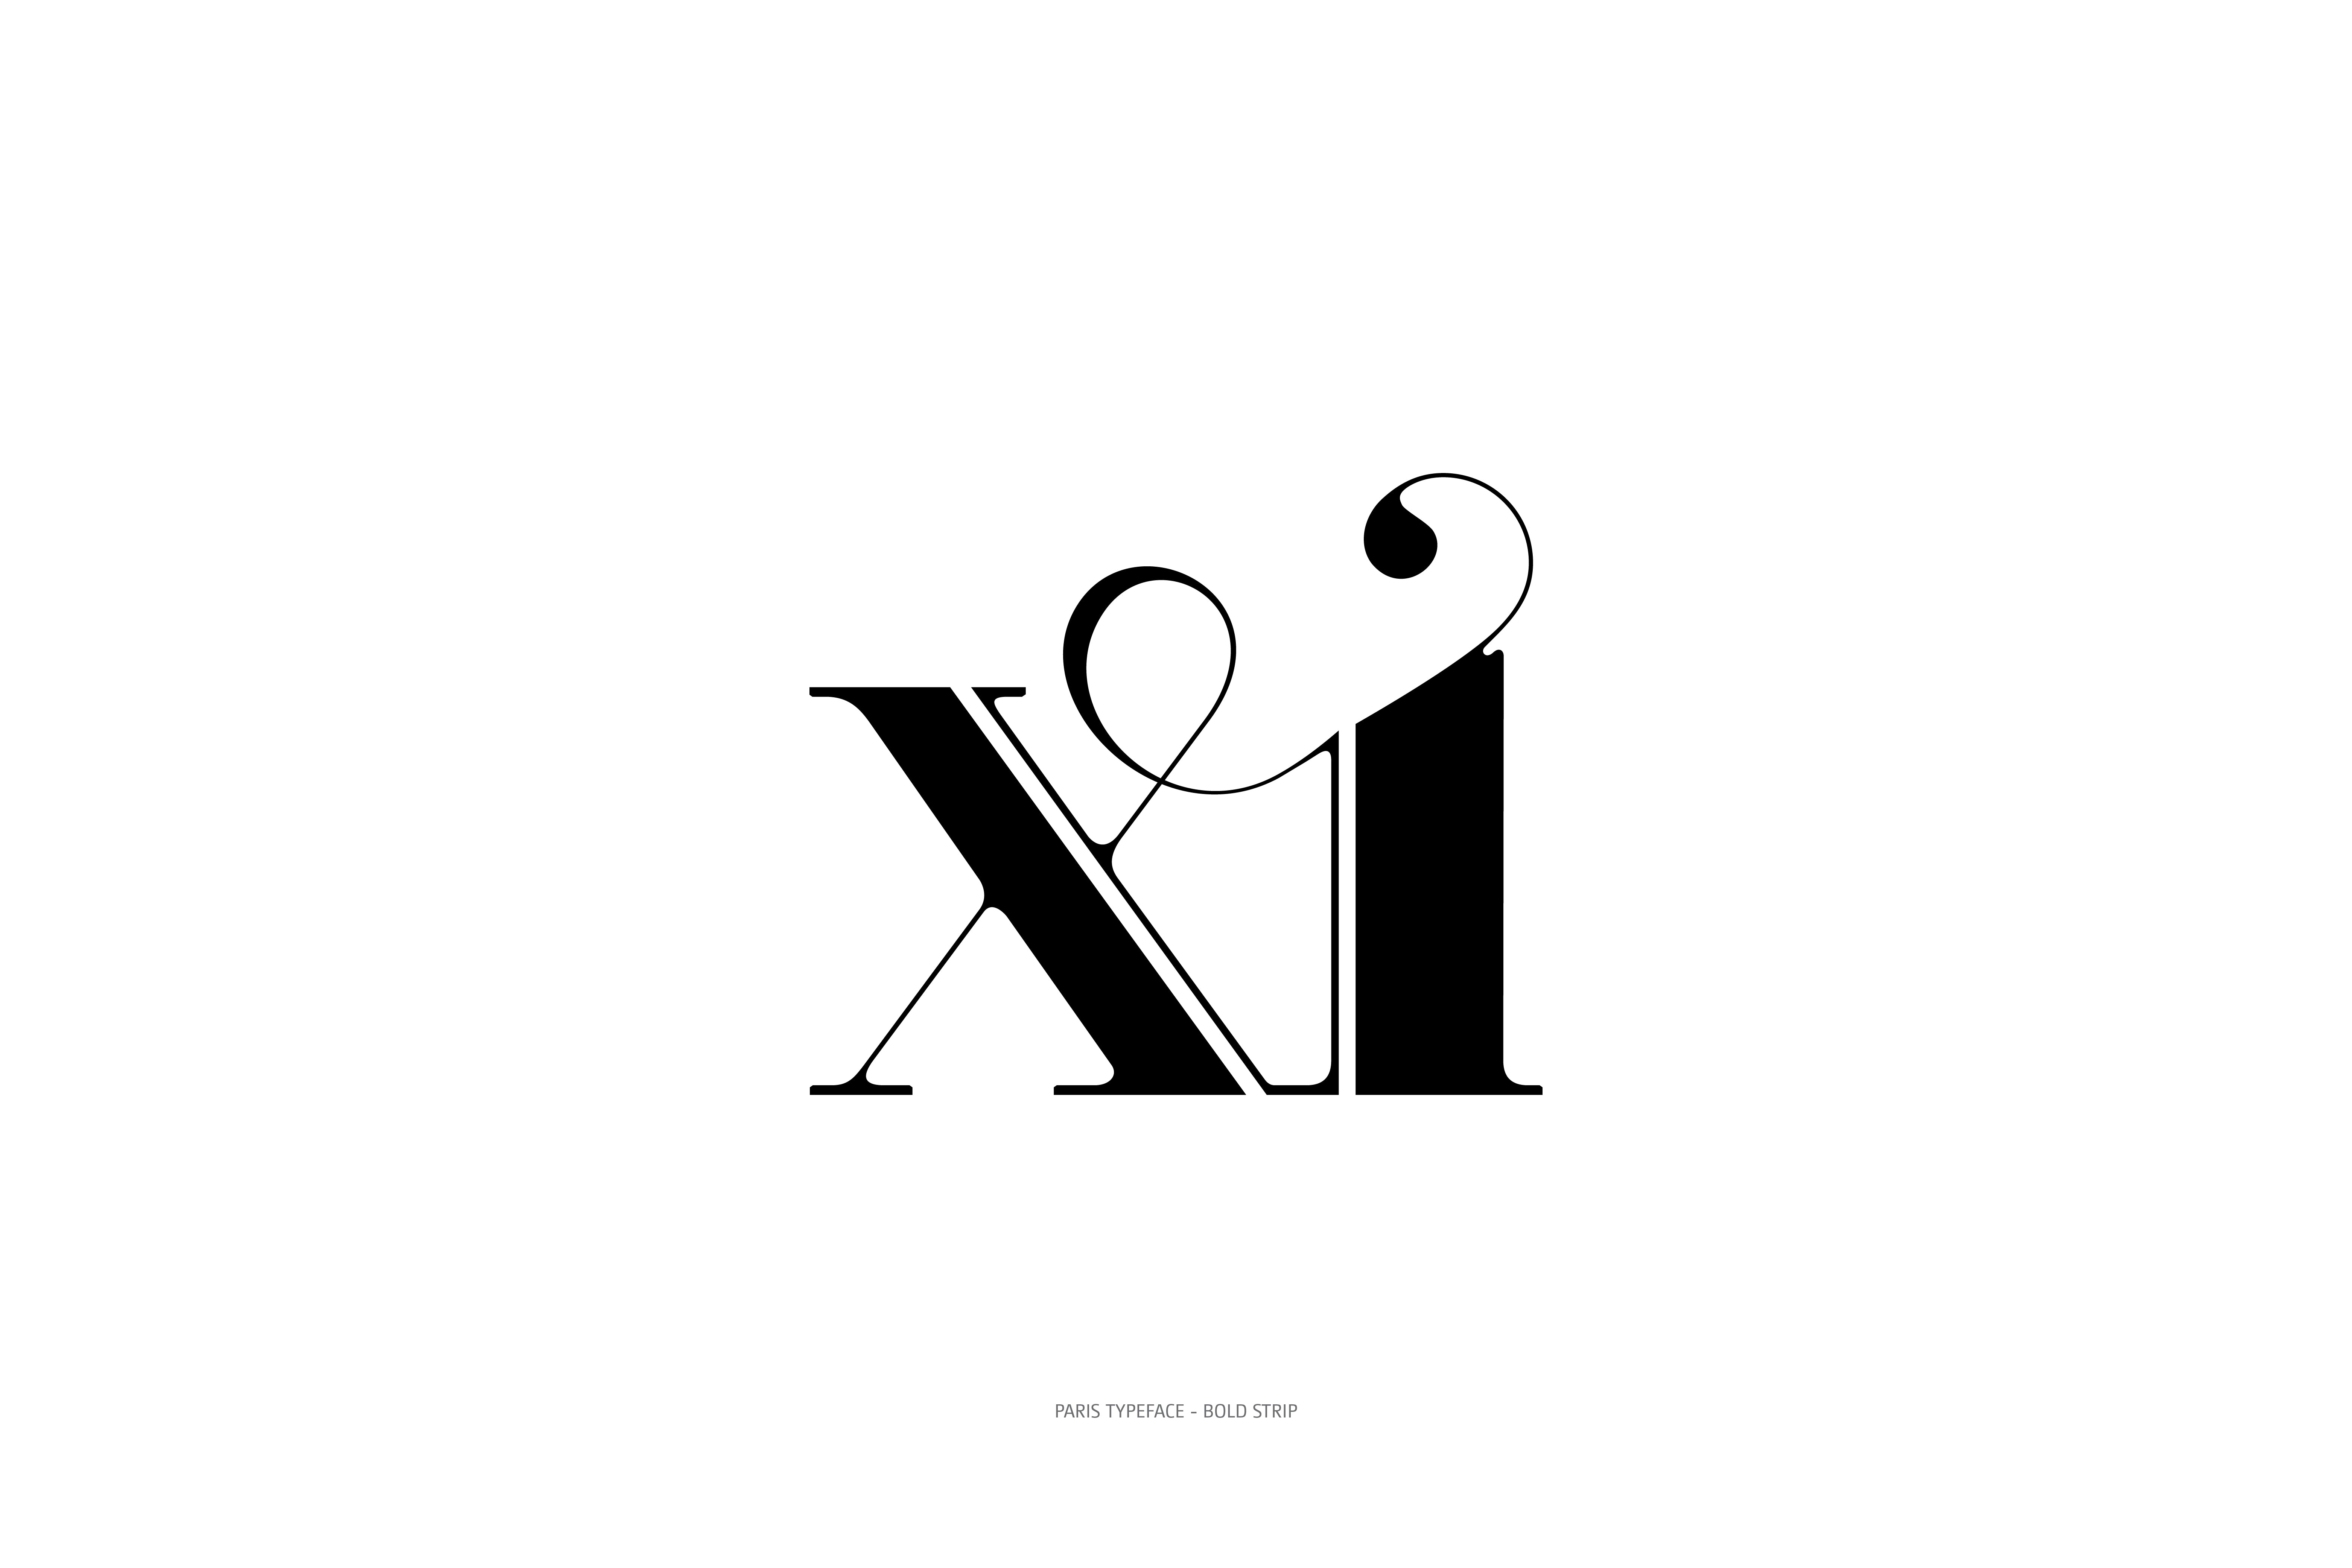 Paris Typeface Bold Strip xi ligature